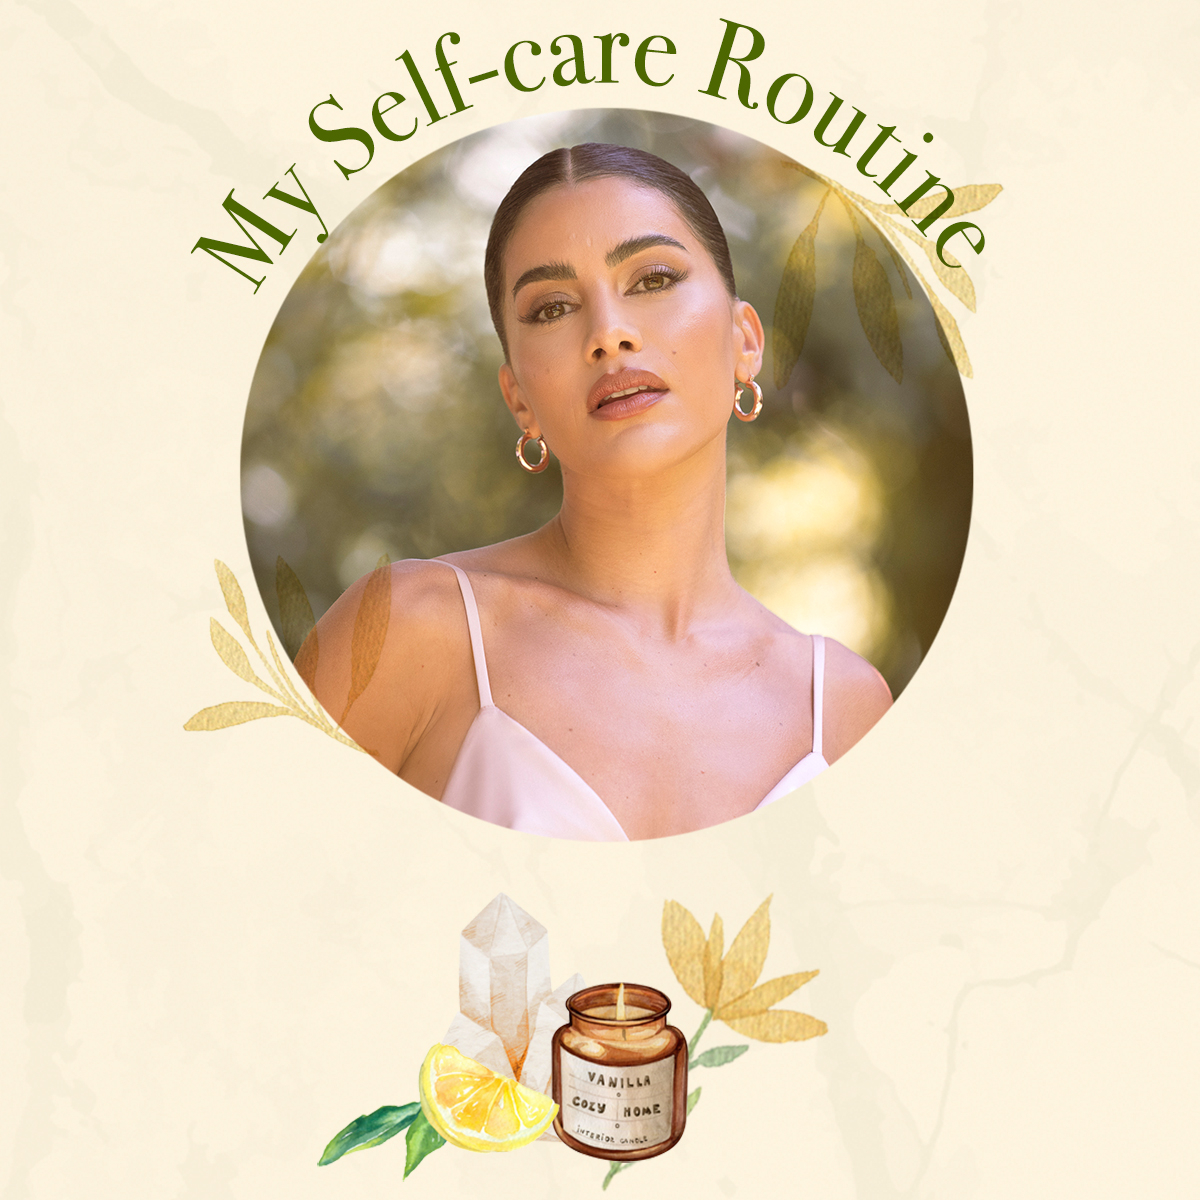 Camila Coelho's Skincare Routine Honors Her Brazilian RootsHelloGiggles